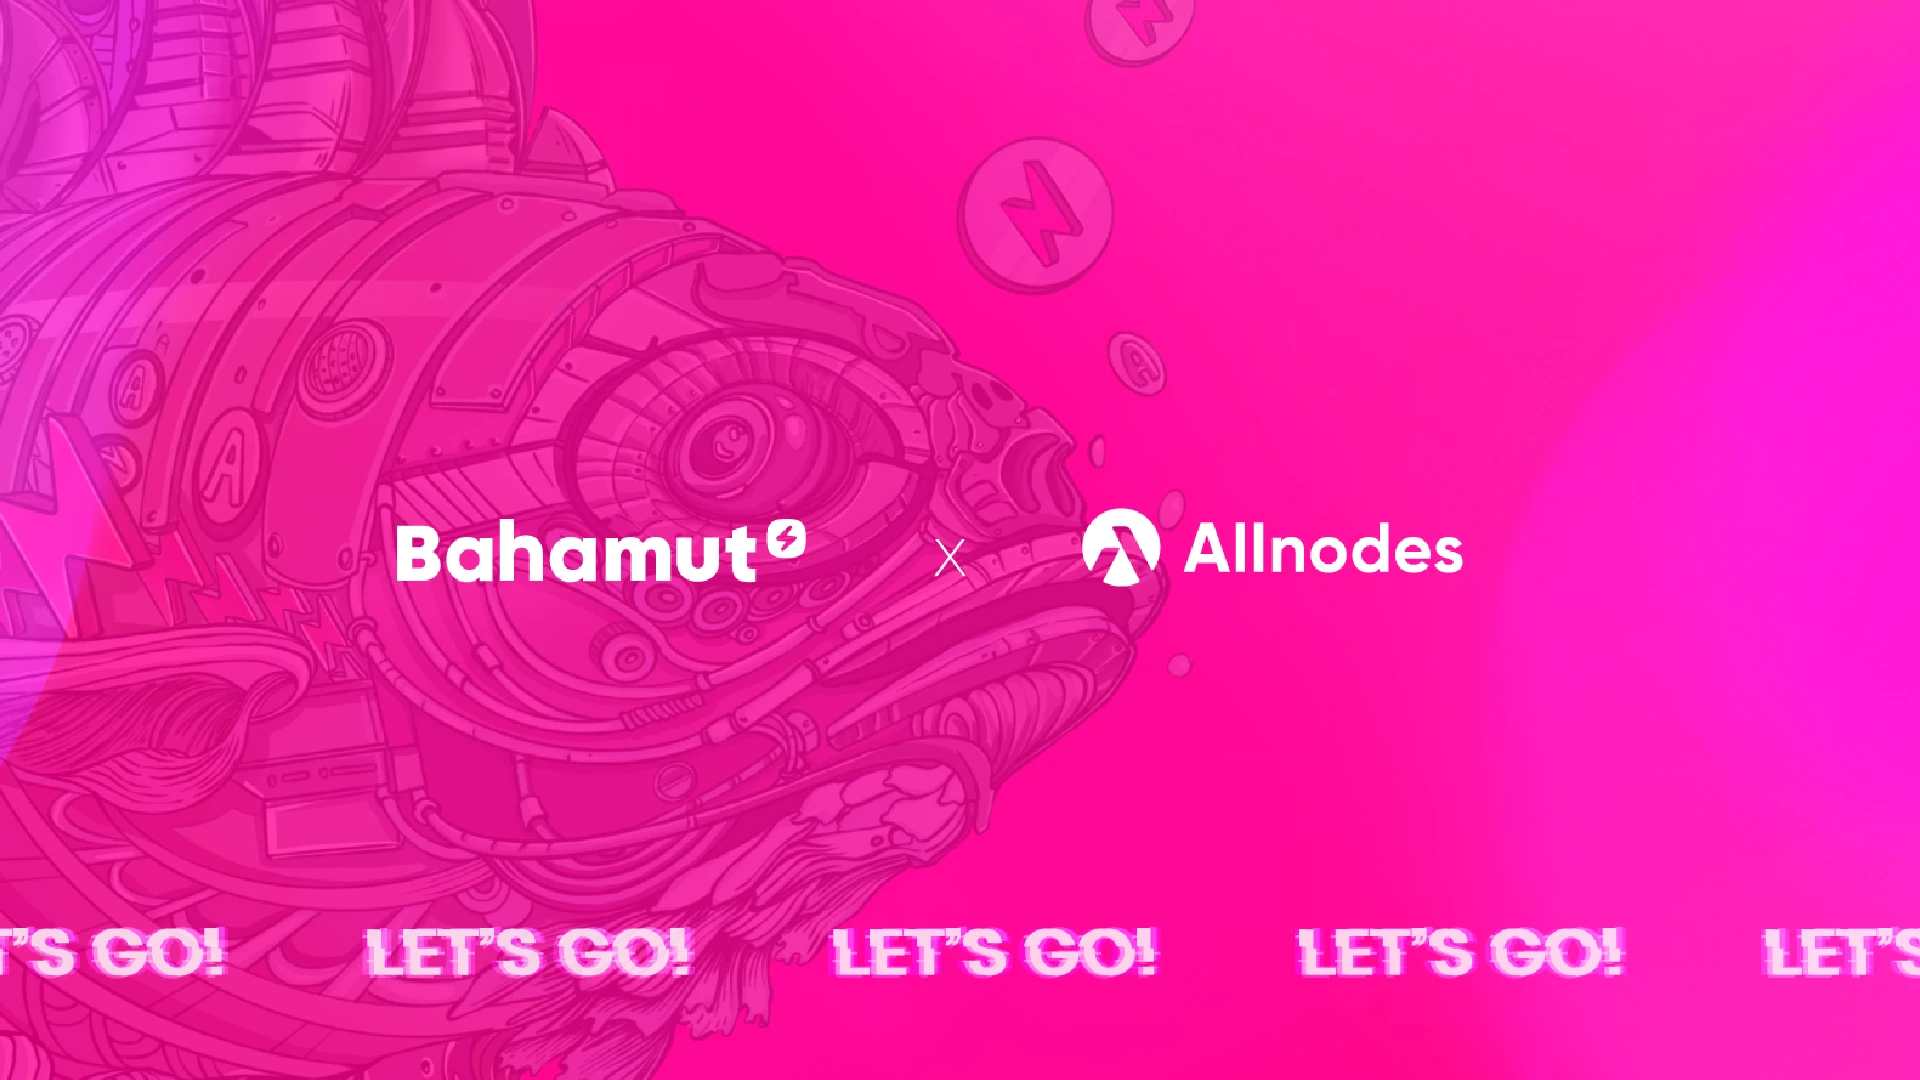 Bahamut объявляет о новом партнерстве, на этот раз с Allnodes